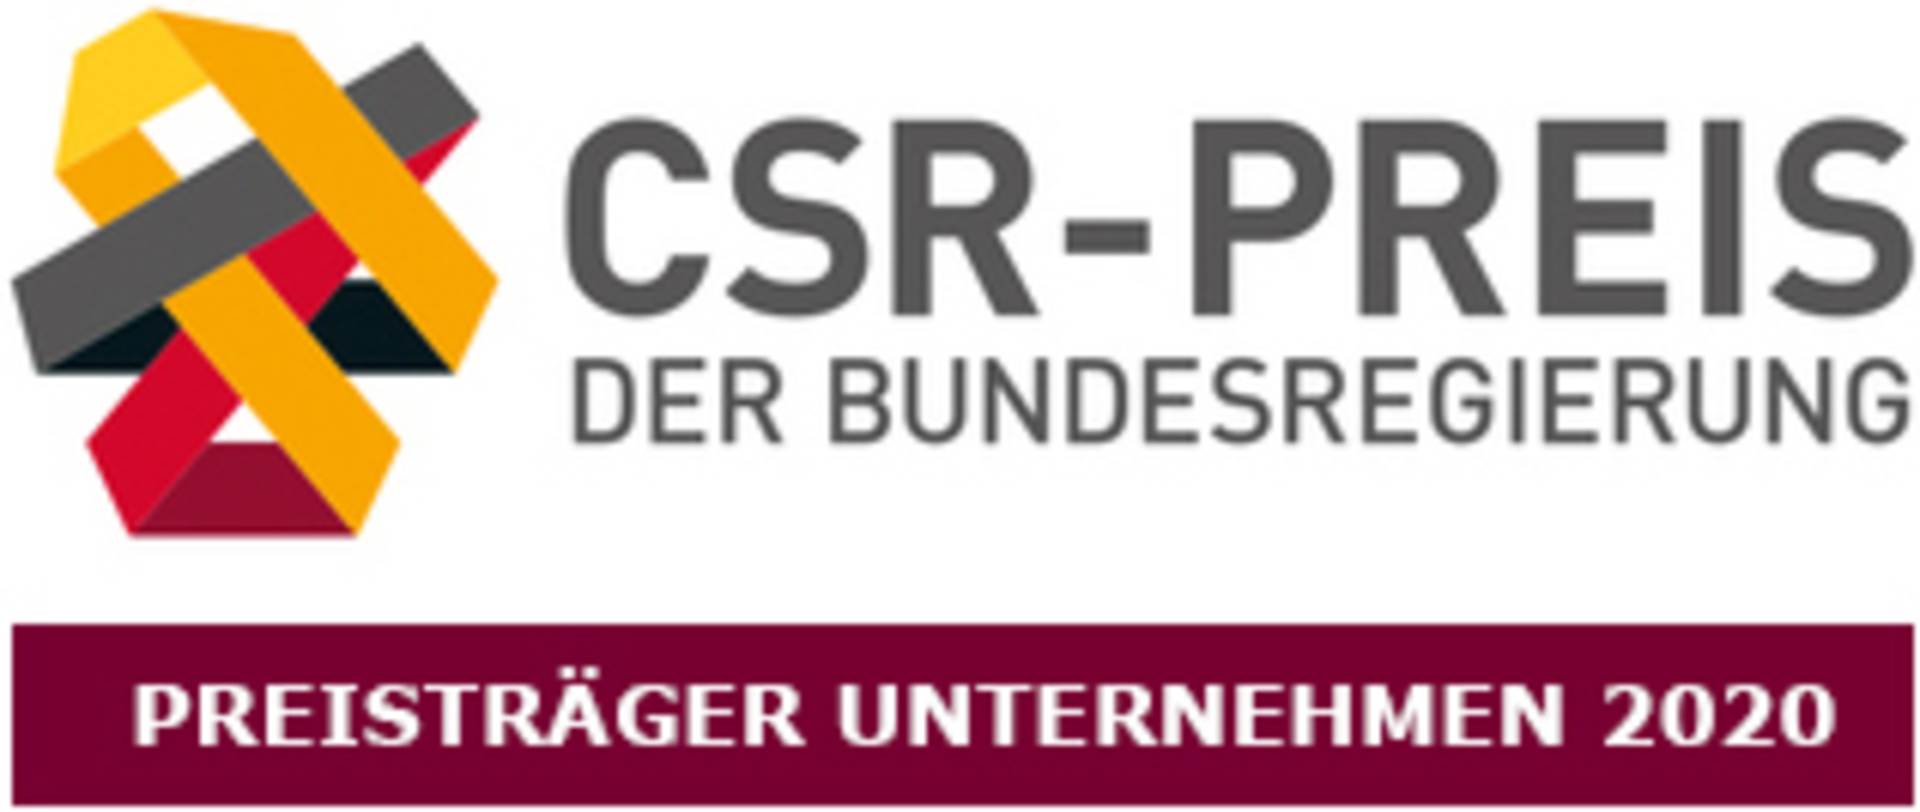 CSR Preis 2020